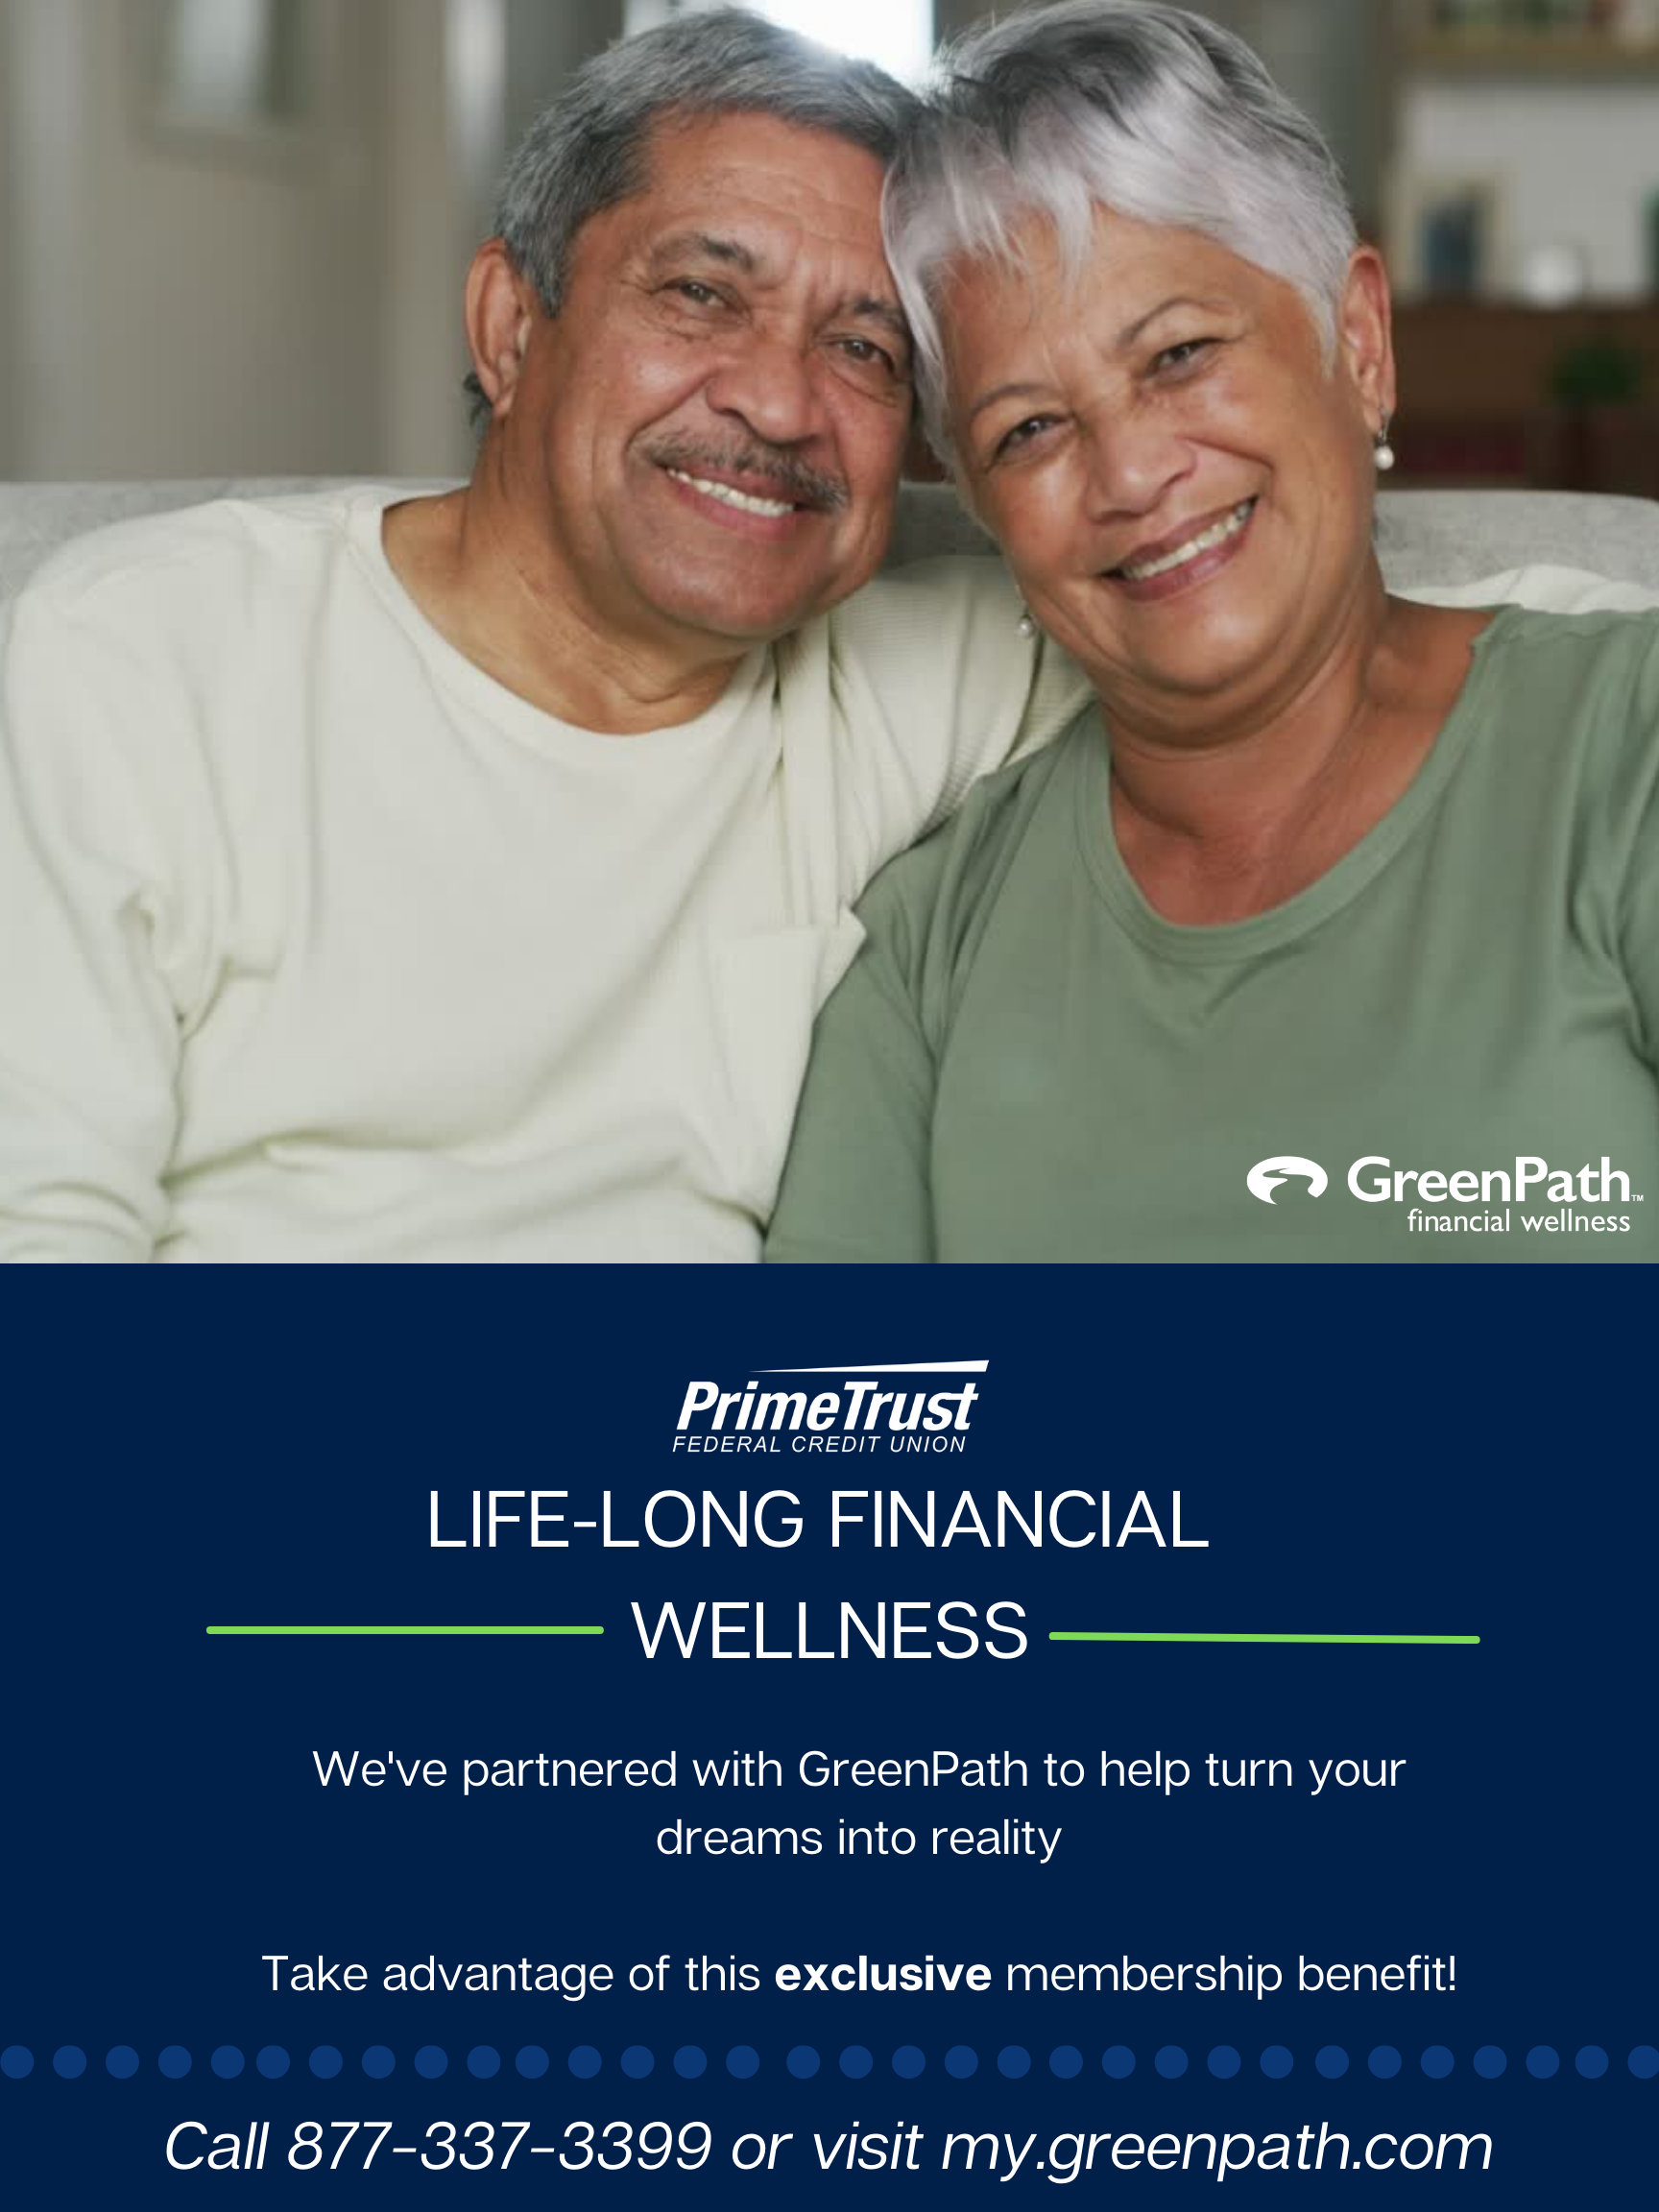 Life-long financial wellness. Old couple smiling at camera